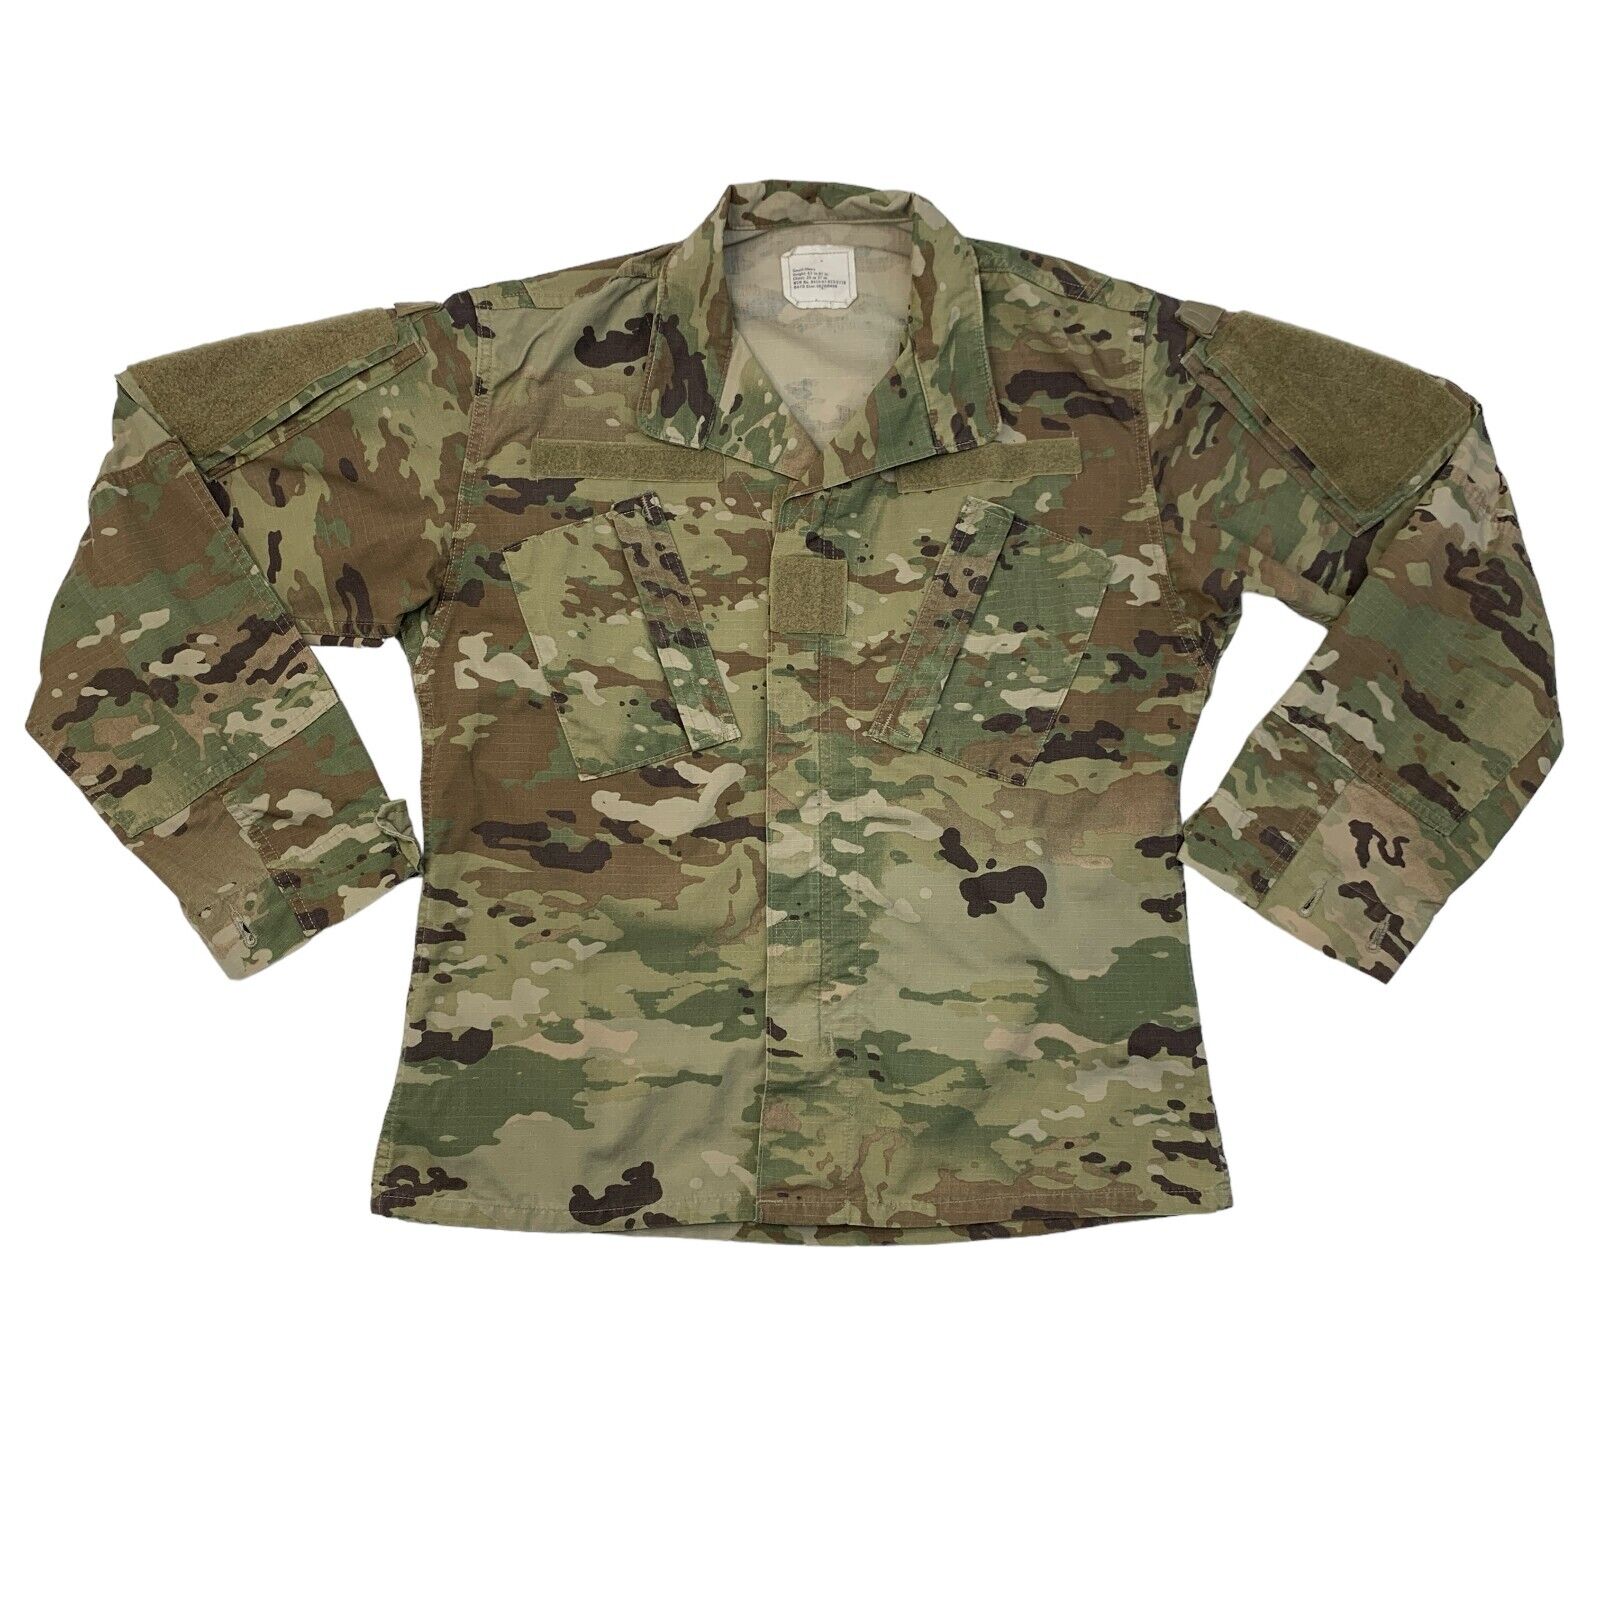 US Army Combat Uniform Jacket Men S Small Short Military Camo Nylon Cotton Blend